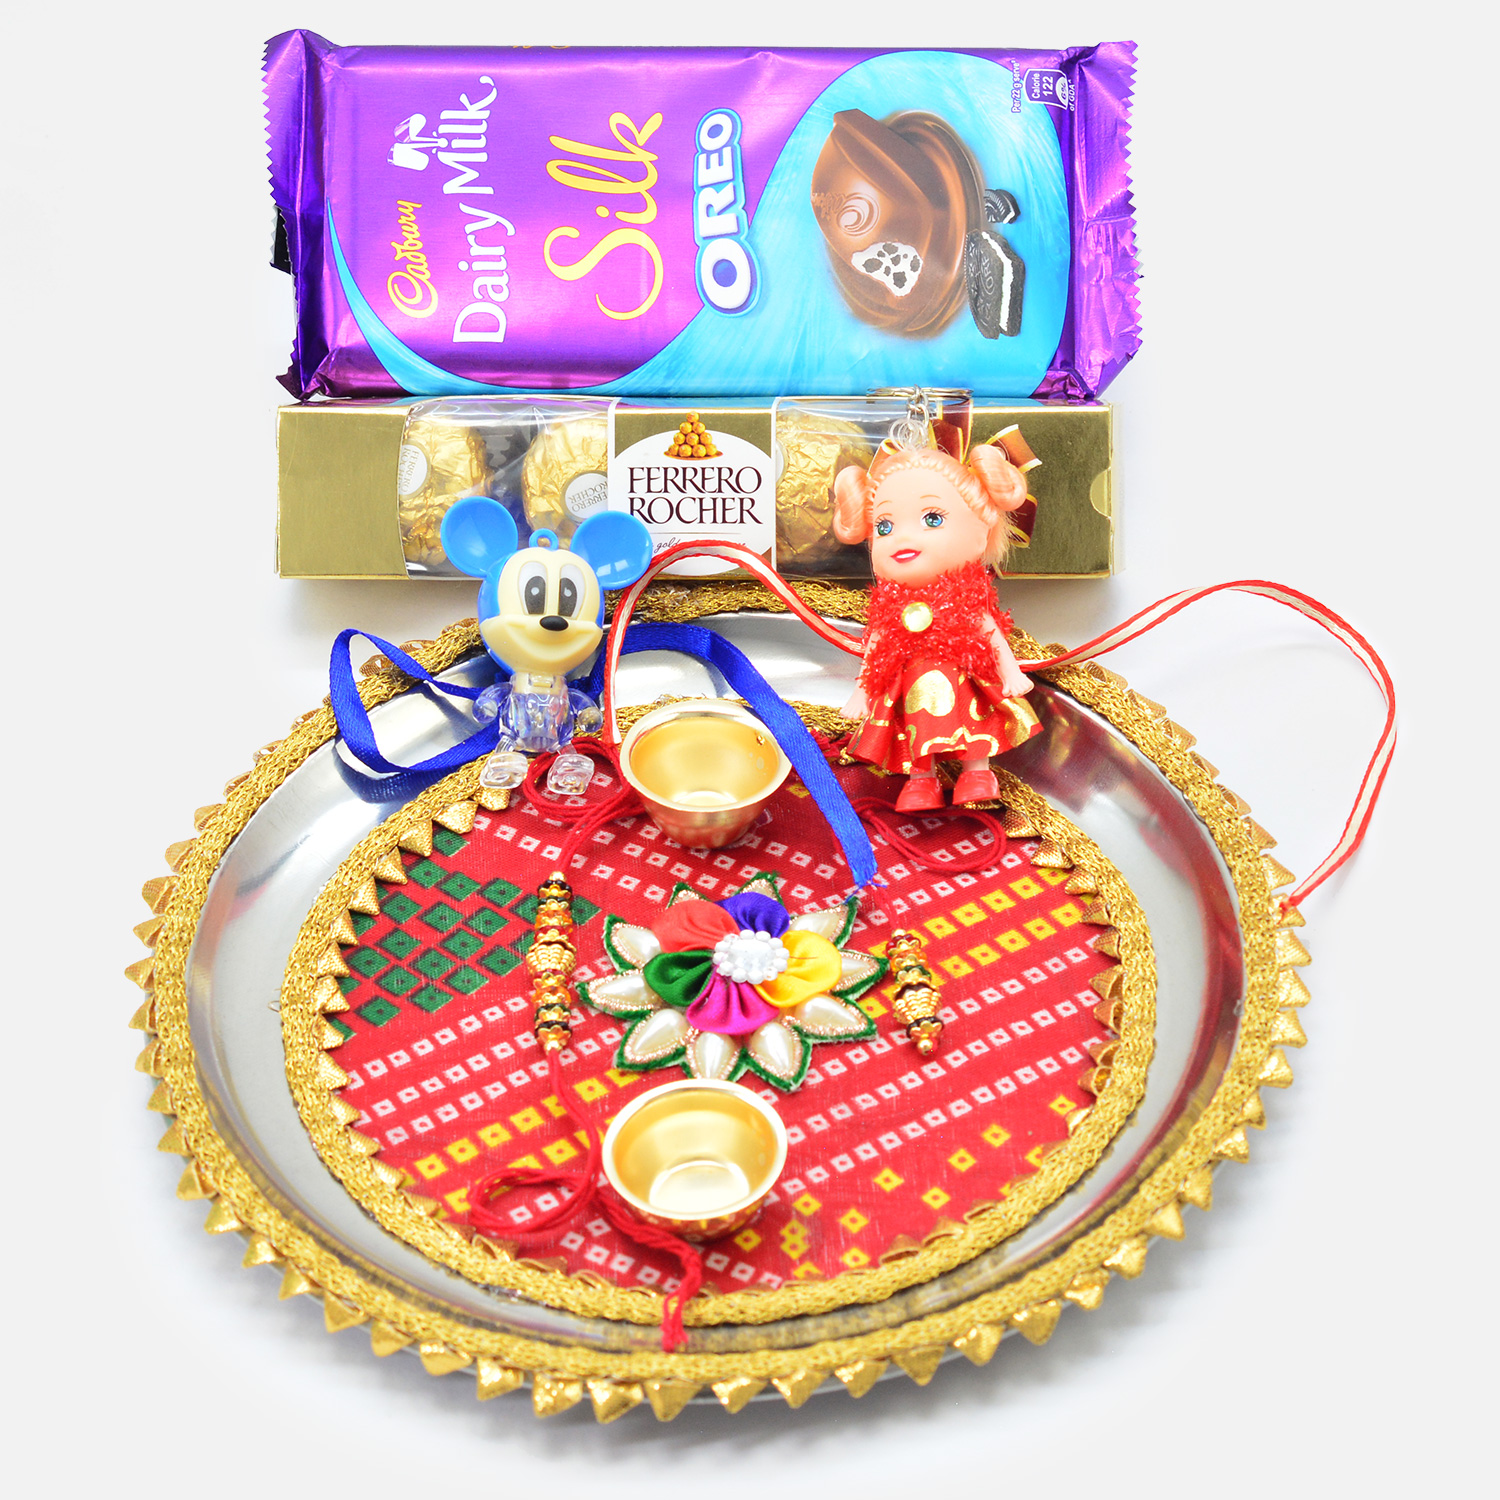 Oreo and Ferrero Rocher Chocolates Pack with Kids and Couple Rakhis and Rajasthani Fabric Designer Thali